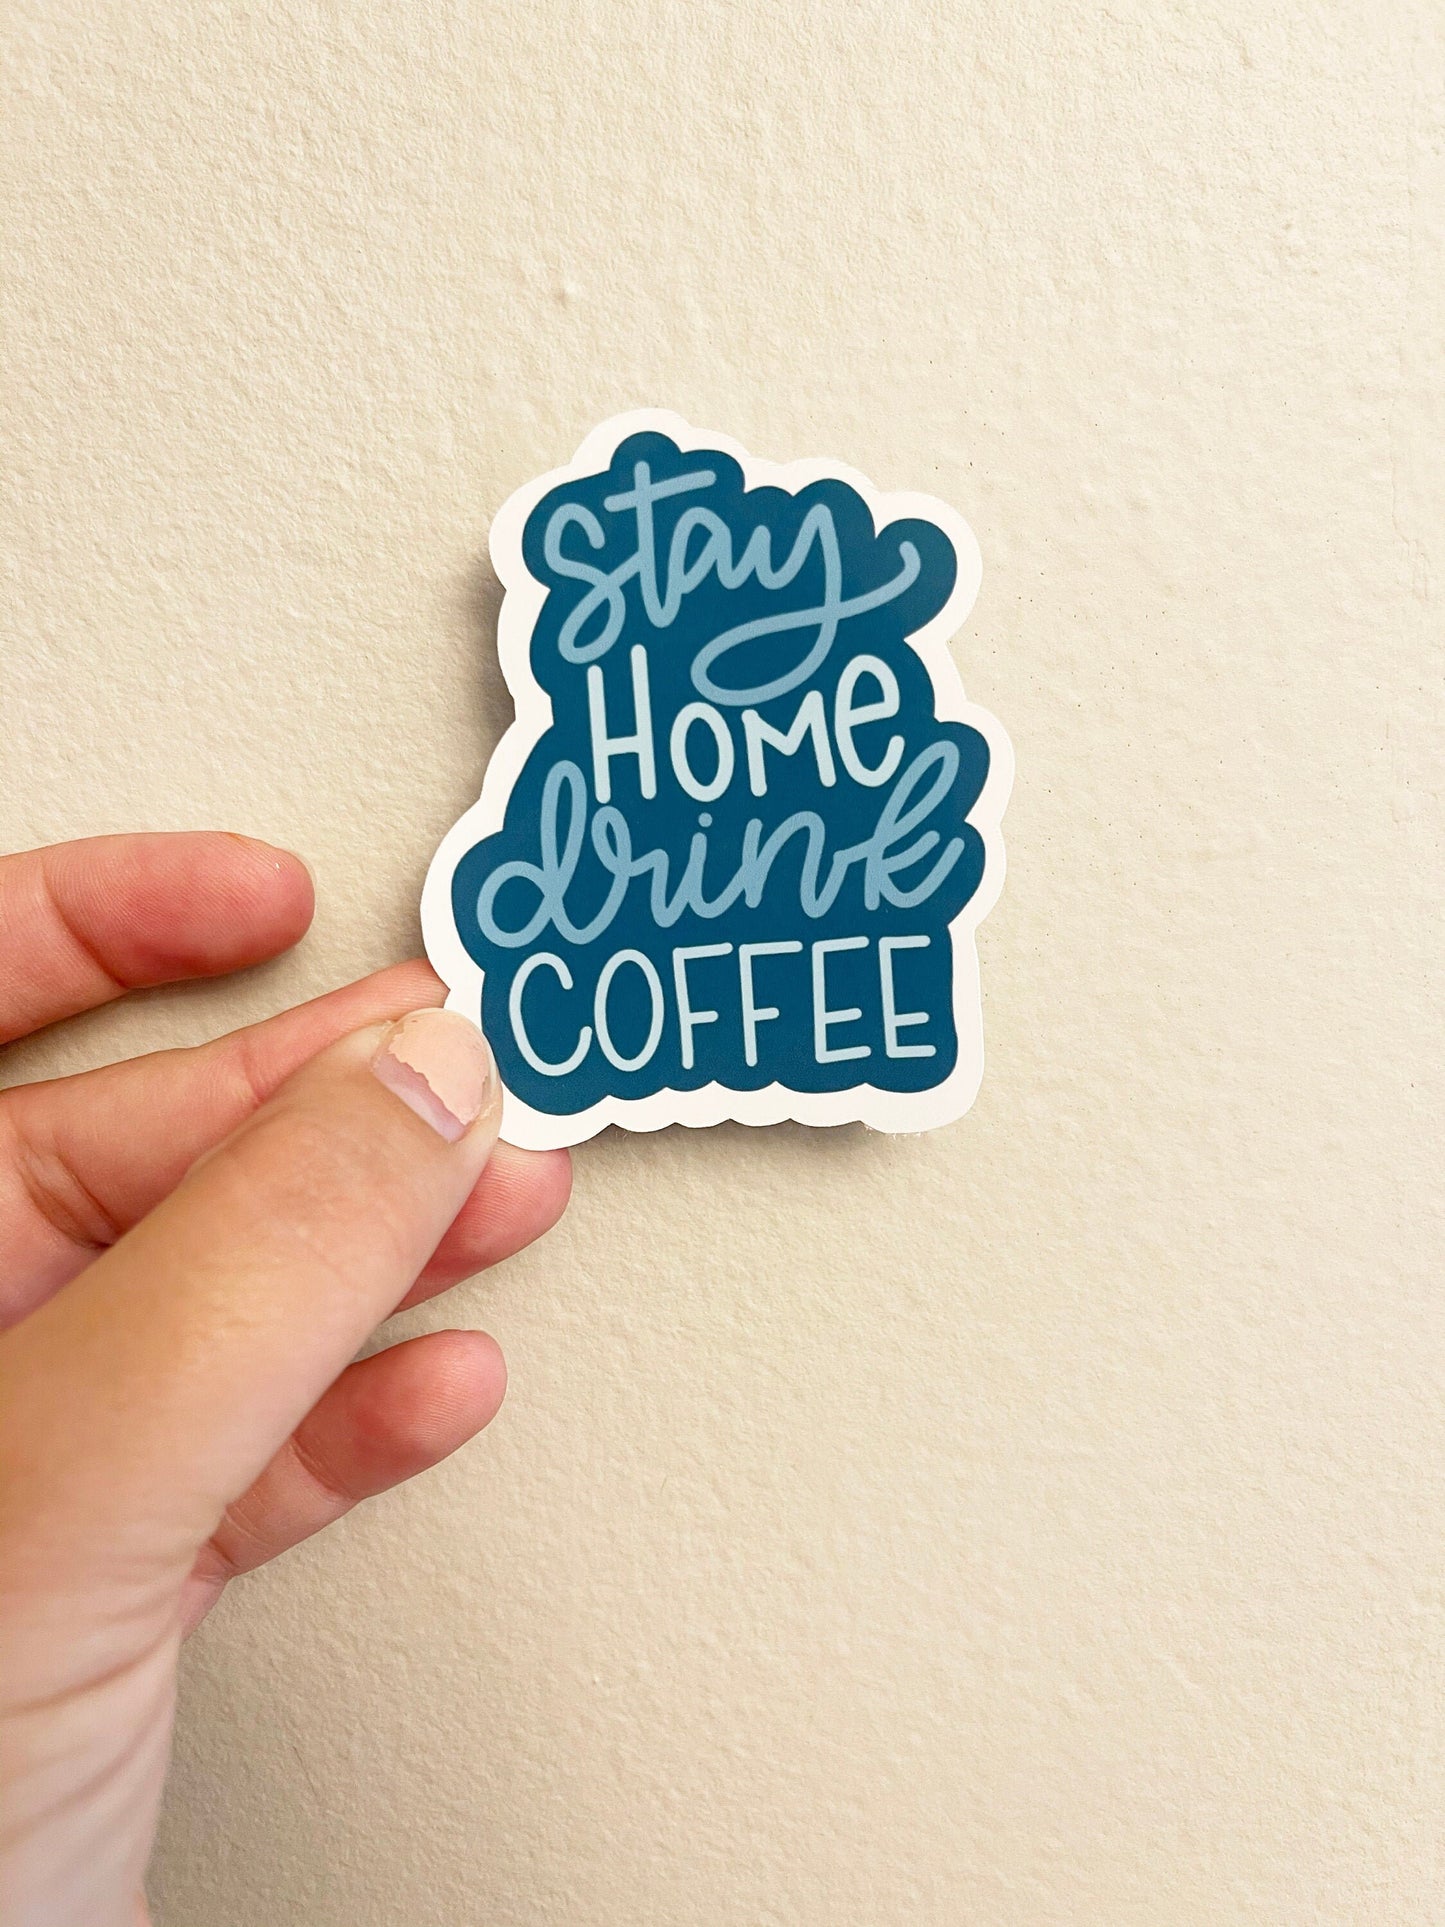 Stay Home Drink Coffee Sticker, Drink Coffee Vinyl Sticker, Gift